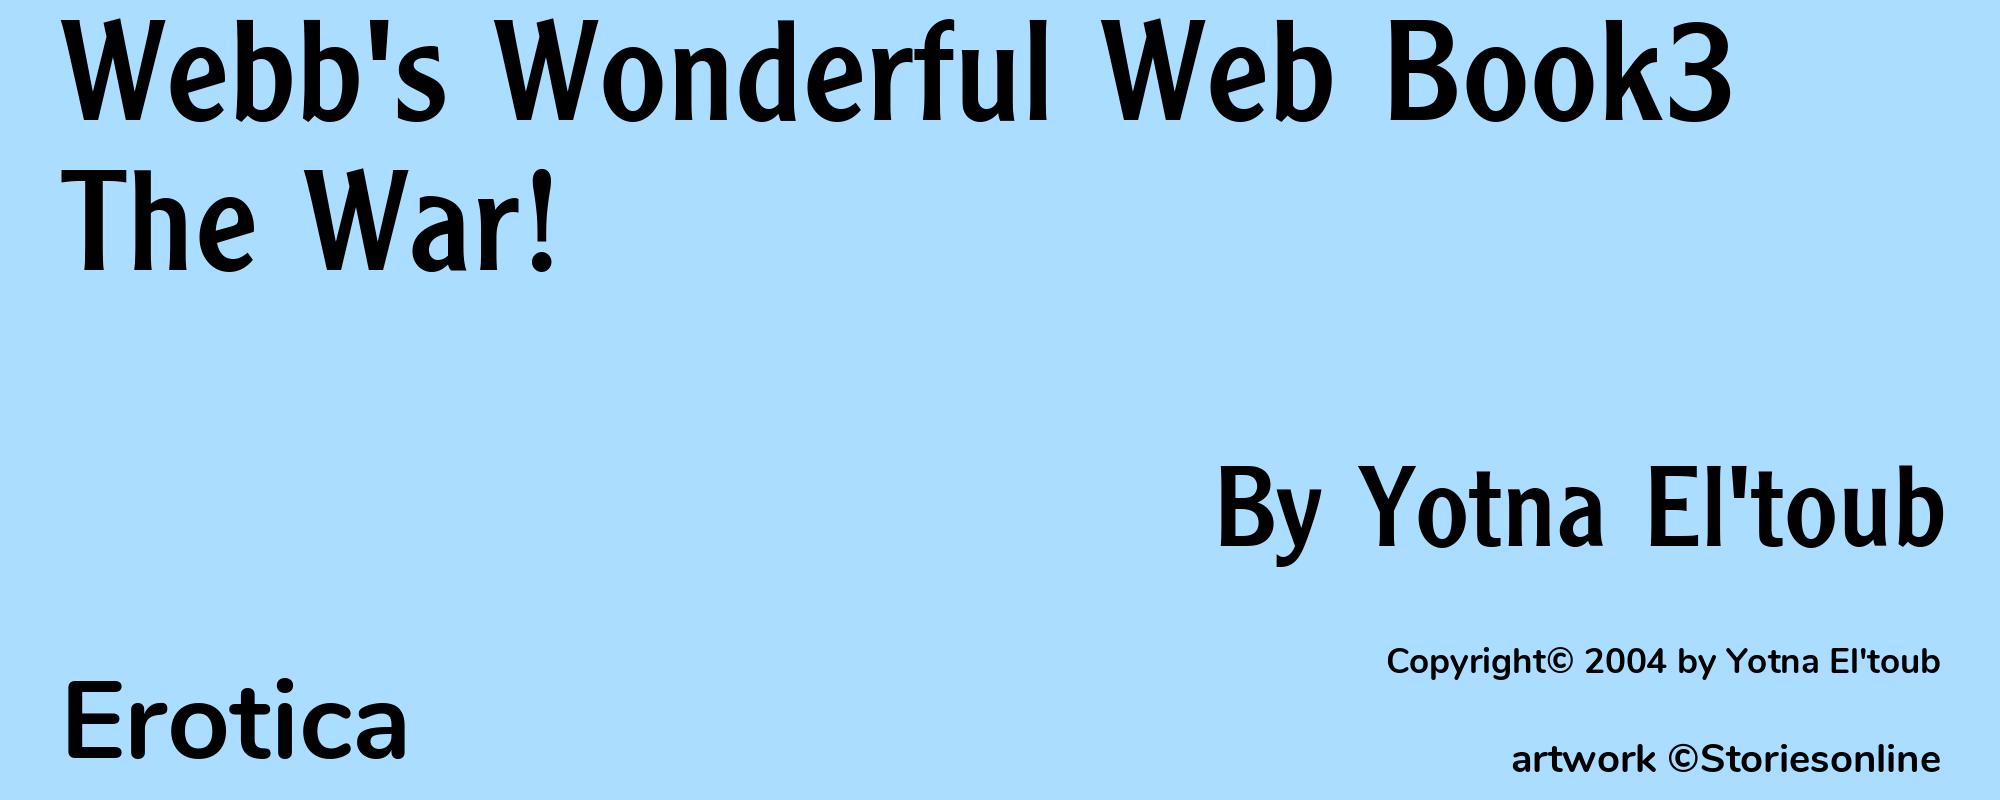 Webb's Wonderful Web Book3 The War! - Cover